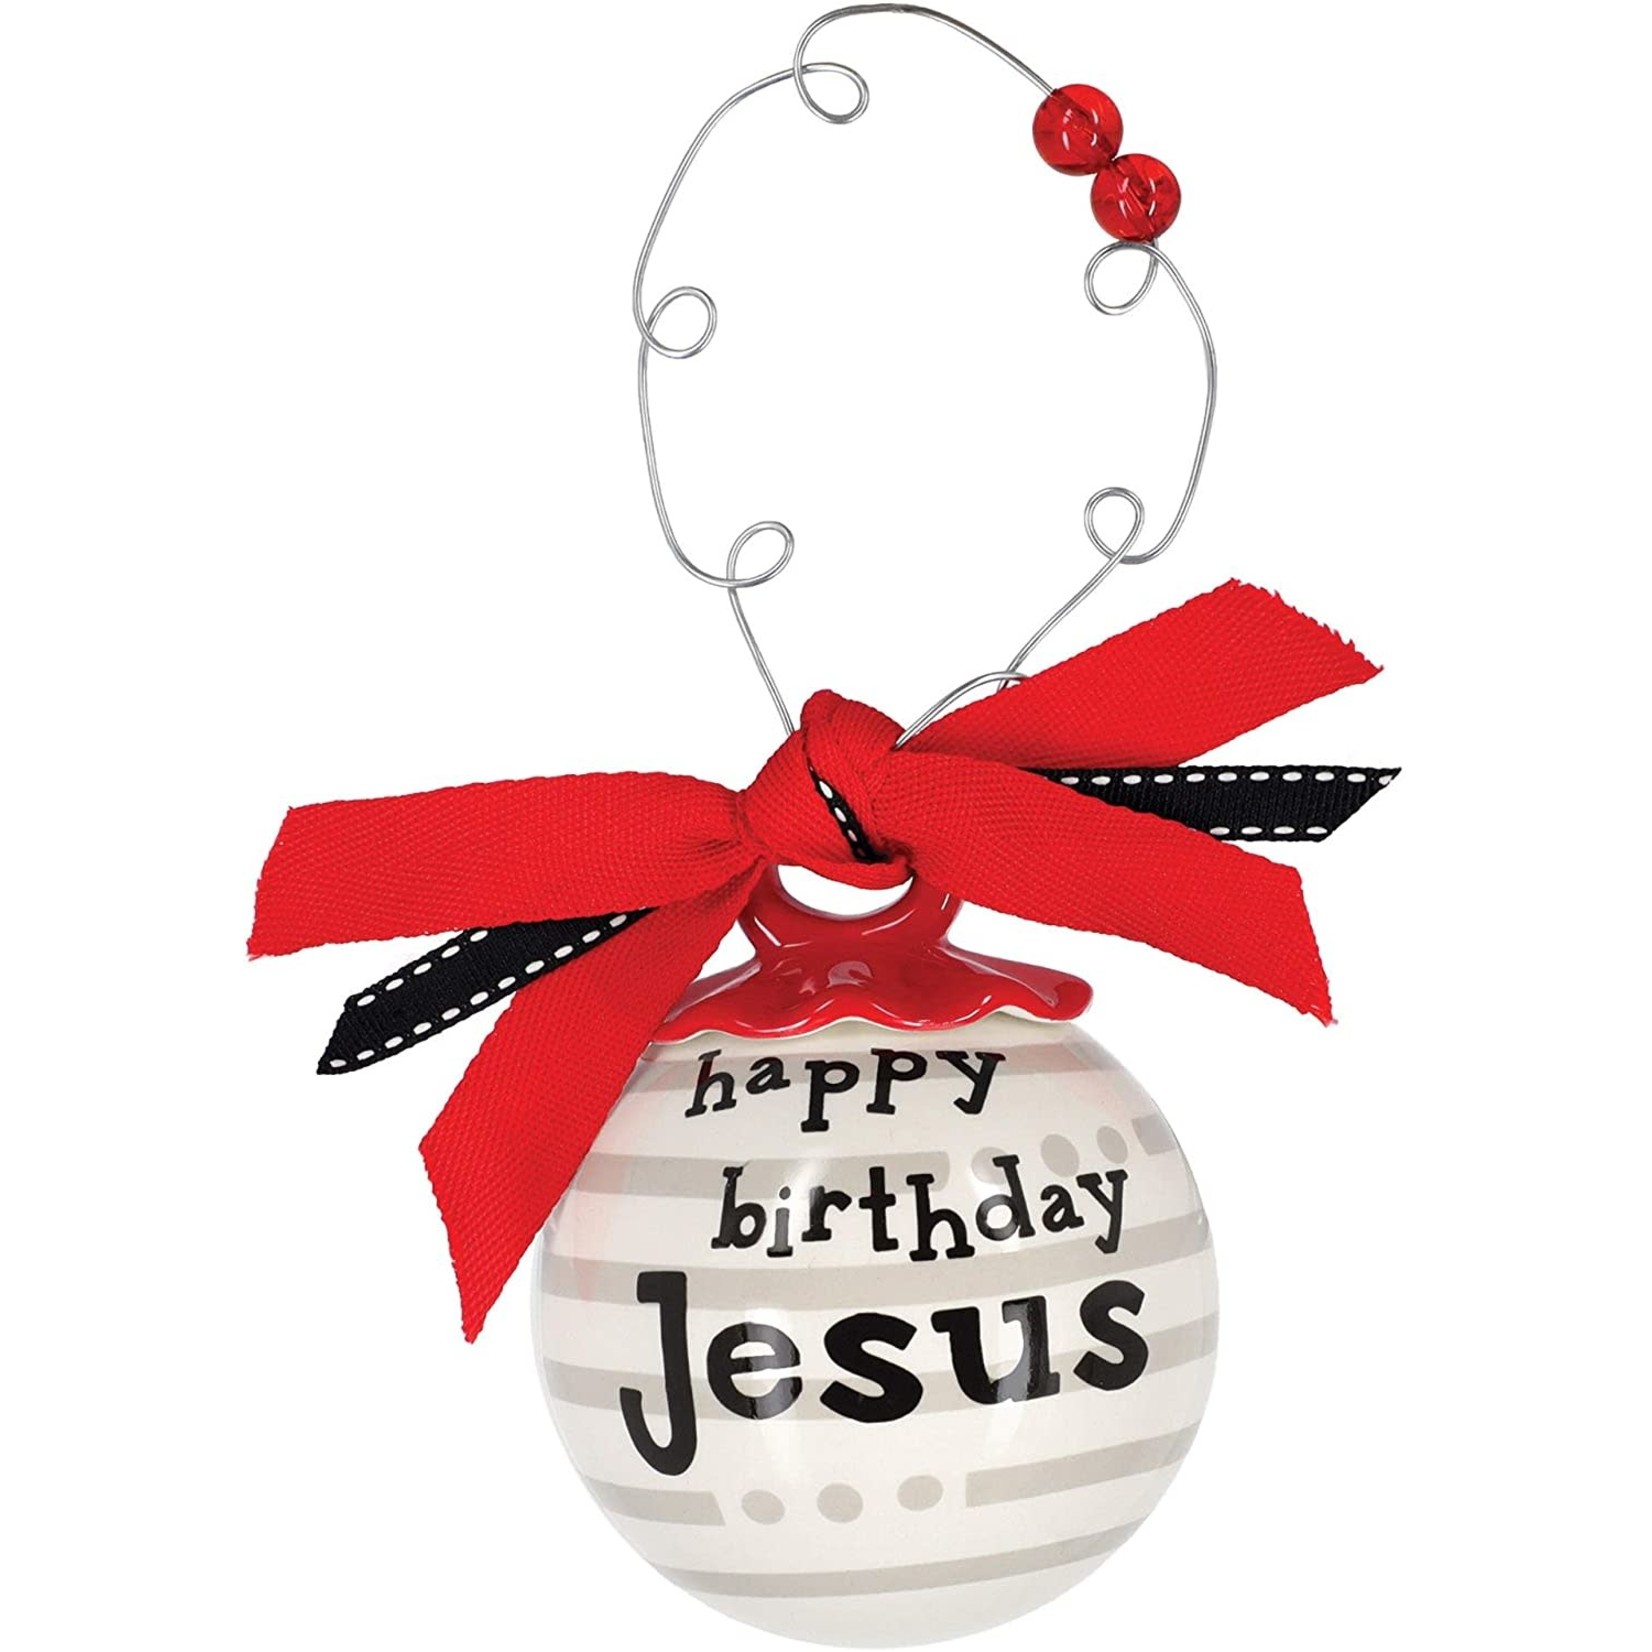 Happy bday Jesus ceramic ball